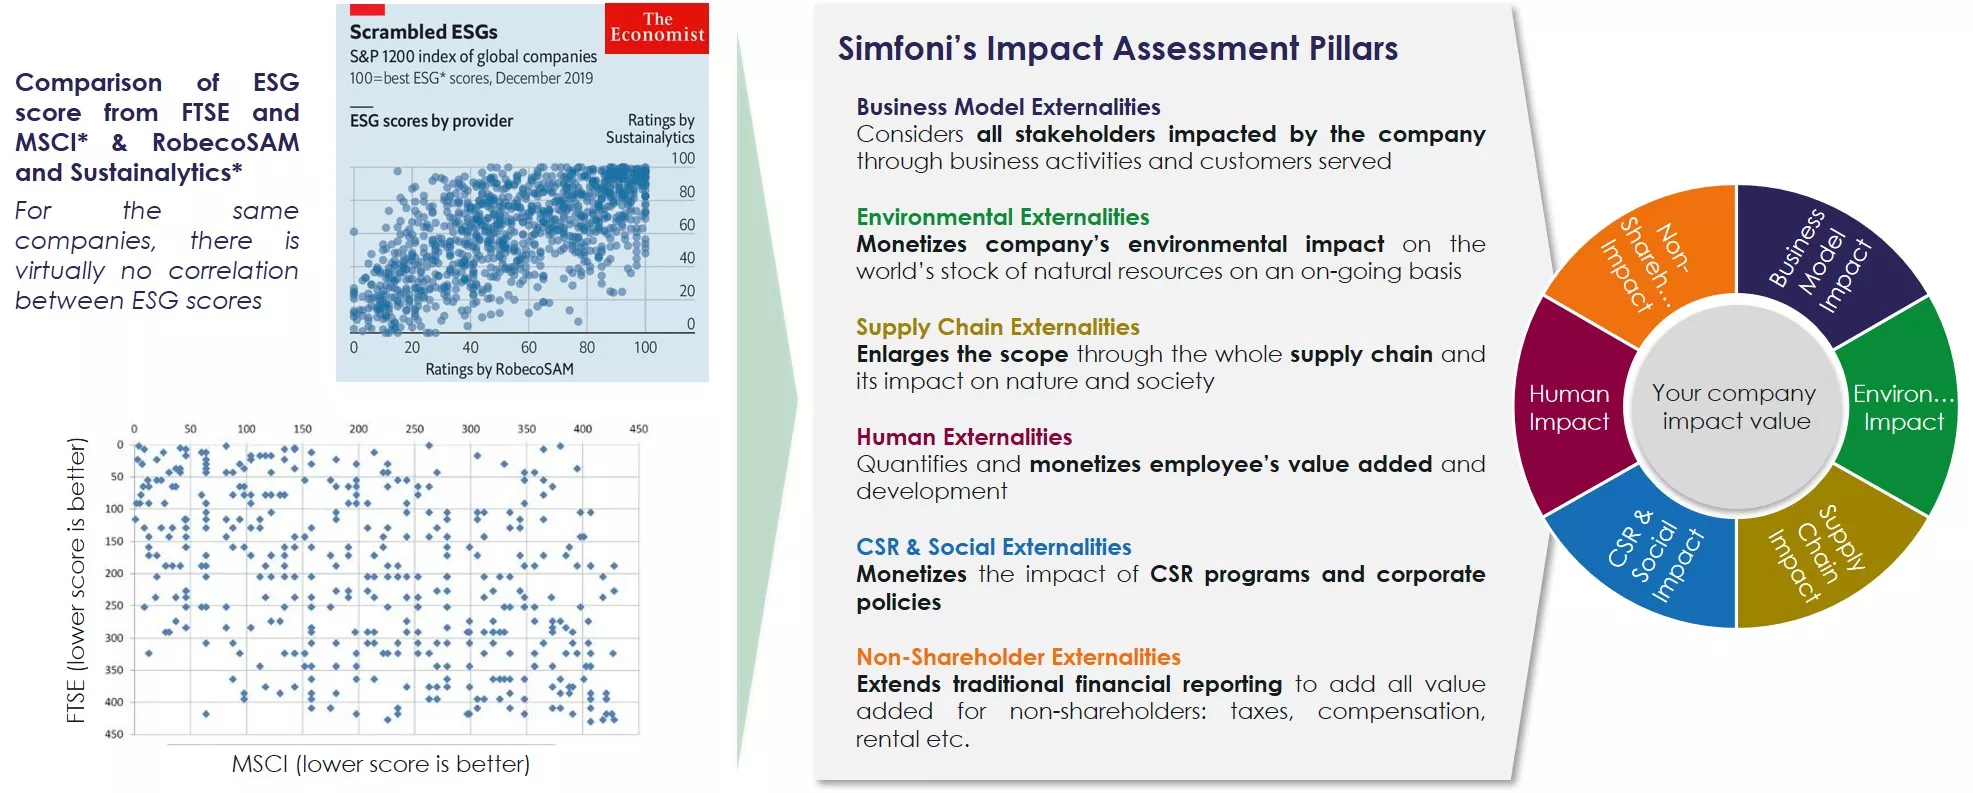 Simfoni's Impact Assessment